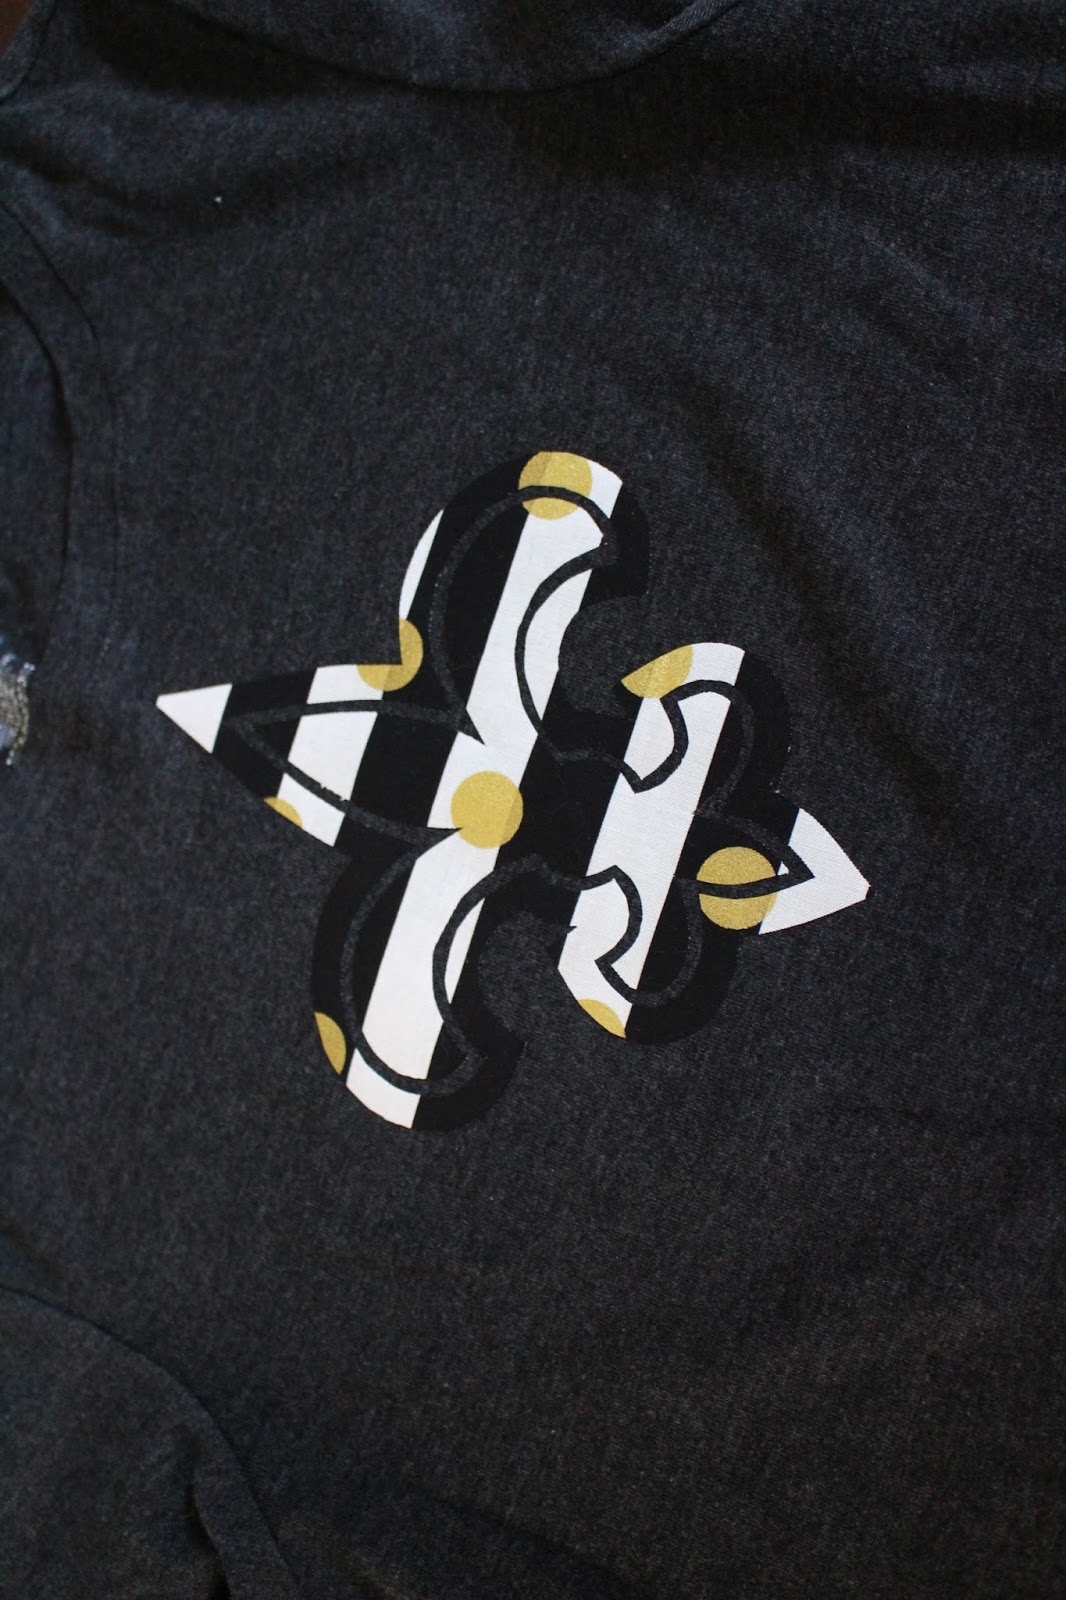 Nadia's DIY Projects: 3 DIY New Orleans Saints T-Shirt Designs